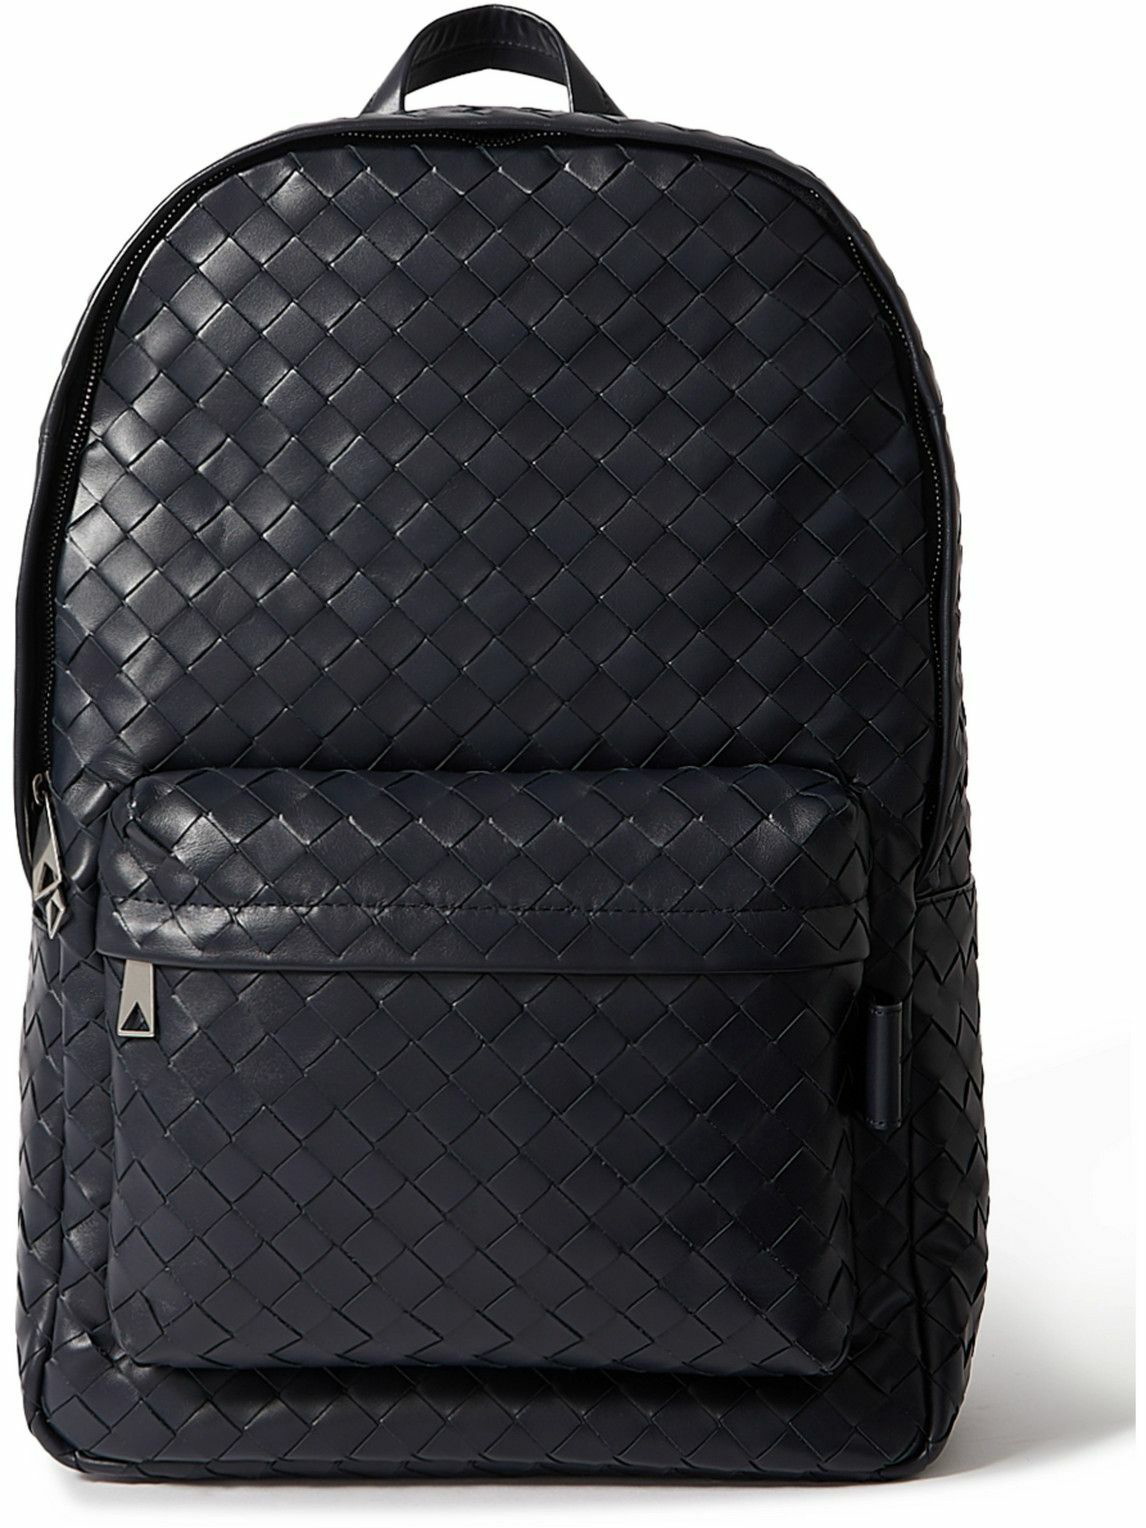 Bottega Veneta - Avenue Intrecciato Leather Backpack Bottega Veneta